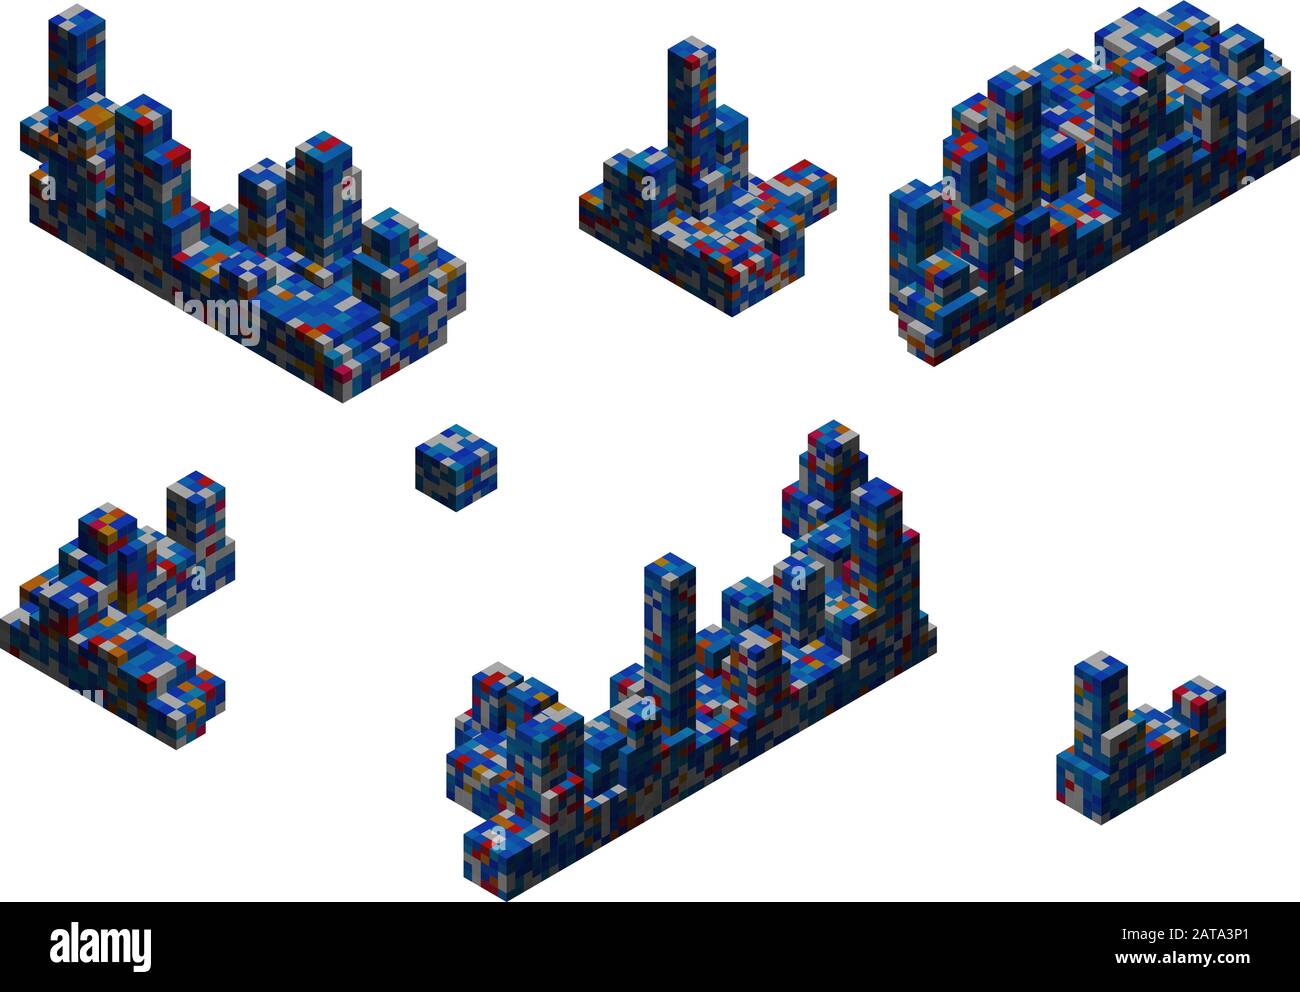 Abstrakte Konstruktion - 3D Pixel Art Isometrische Elemente für Design-Projekt - Vektor-Illustration Stock Vektor